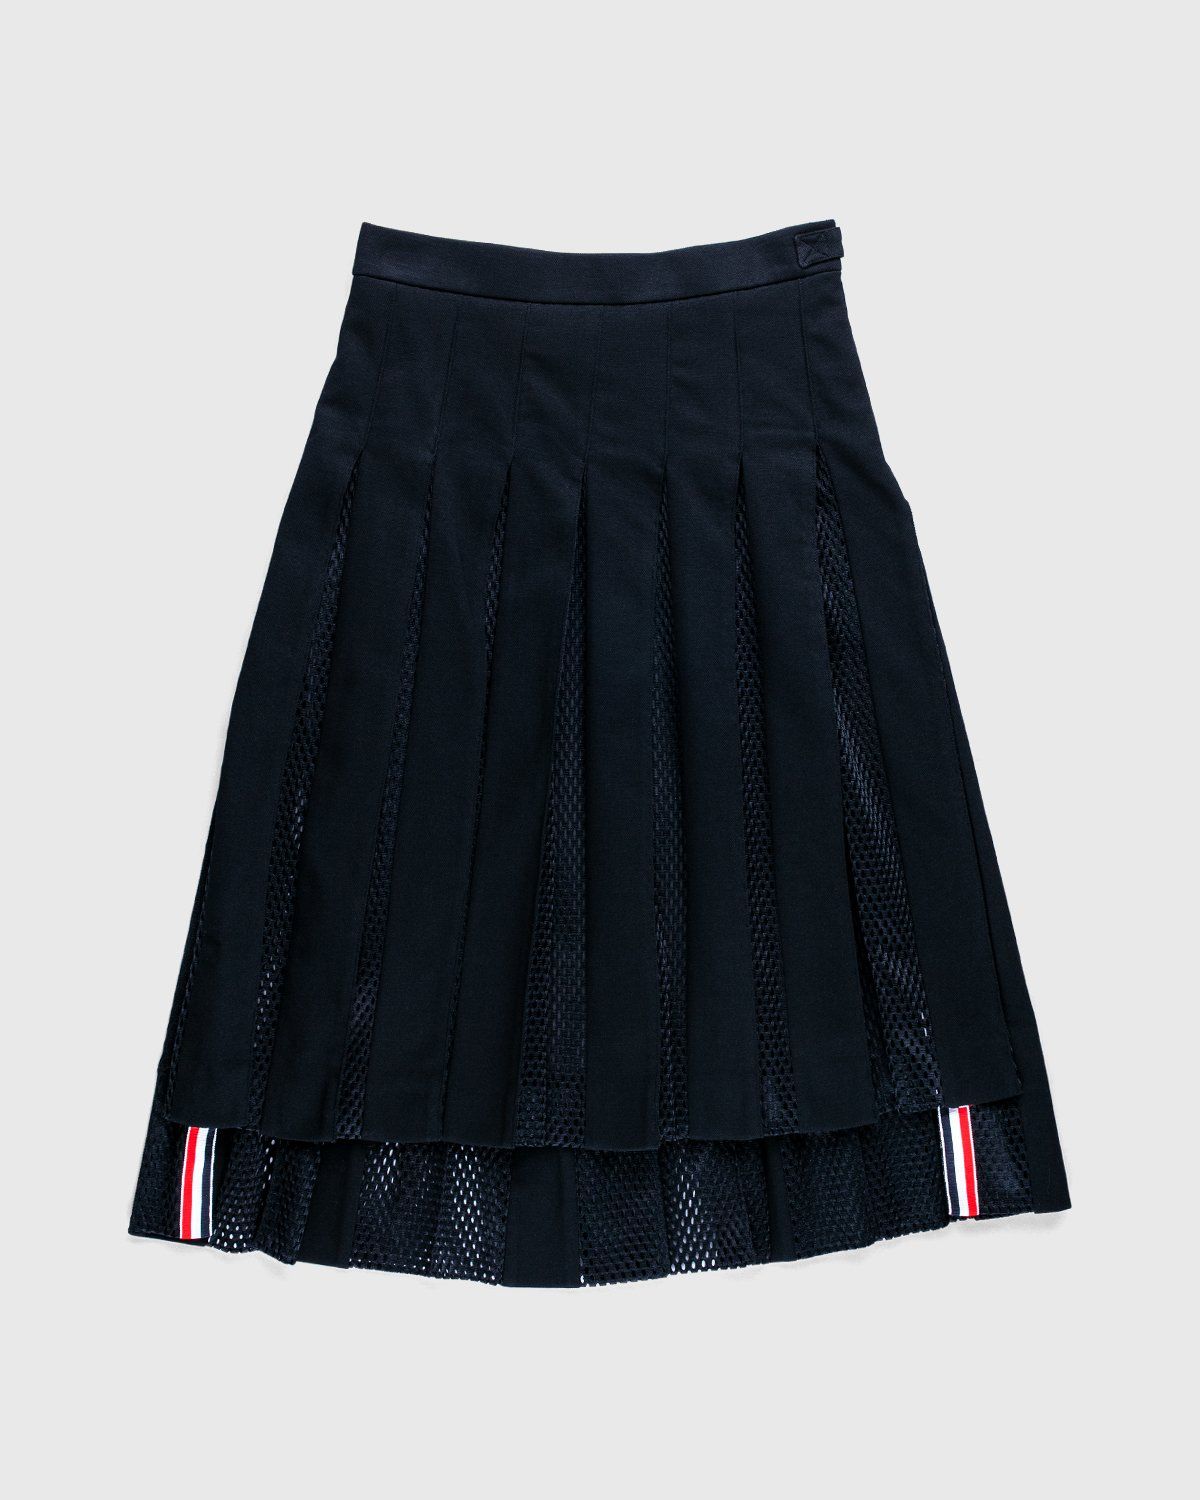 Thom Browne x Highsnobiety – Men's Pleated Mesh Skirt Black - Image 1